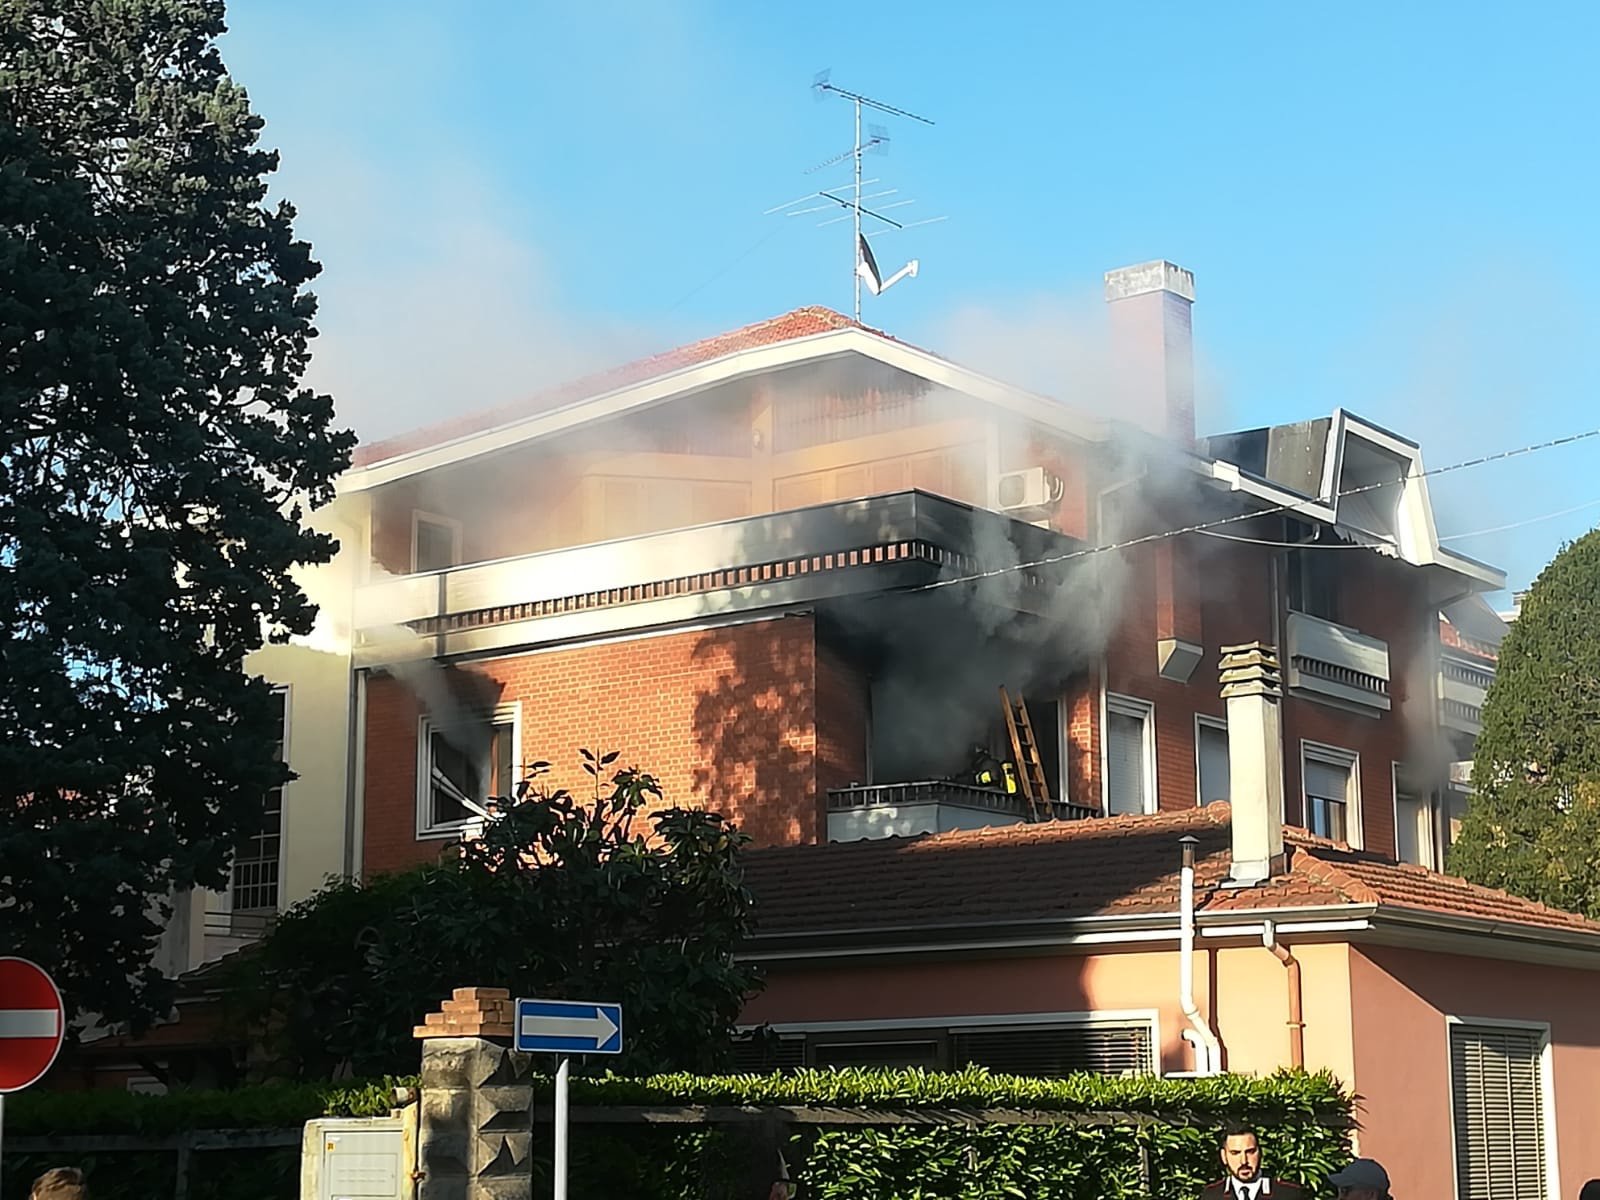 Incendio in una villetta a Valenza